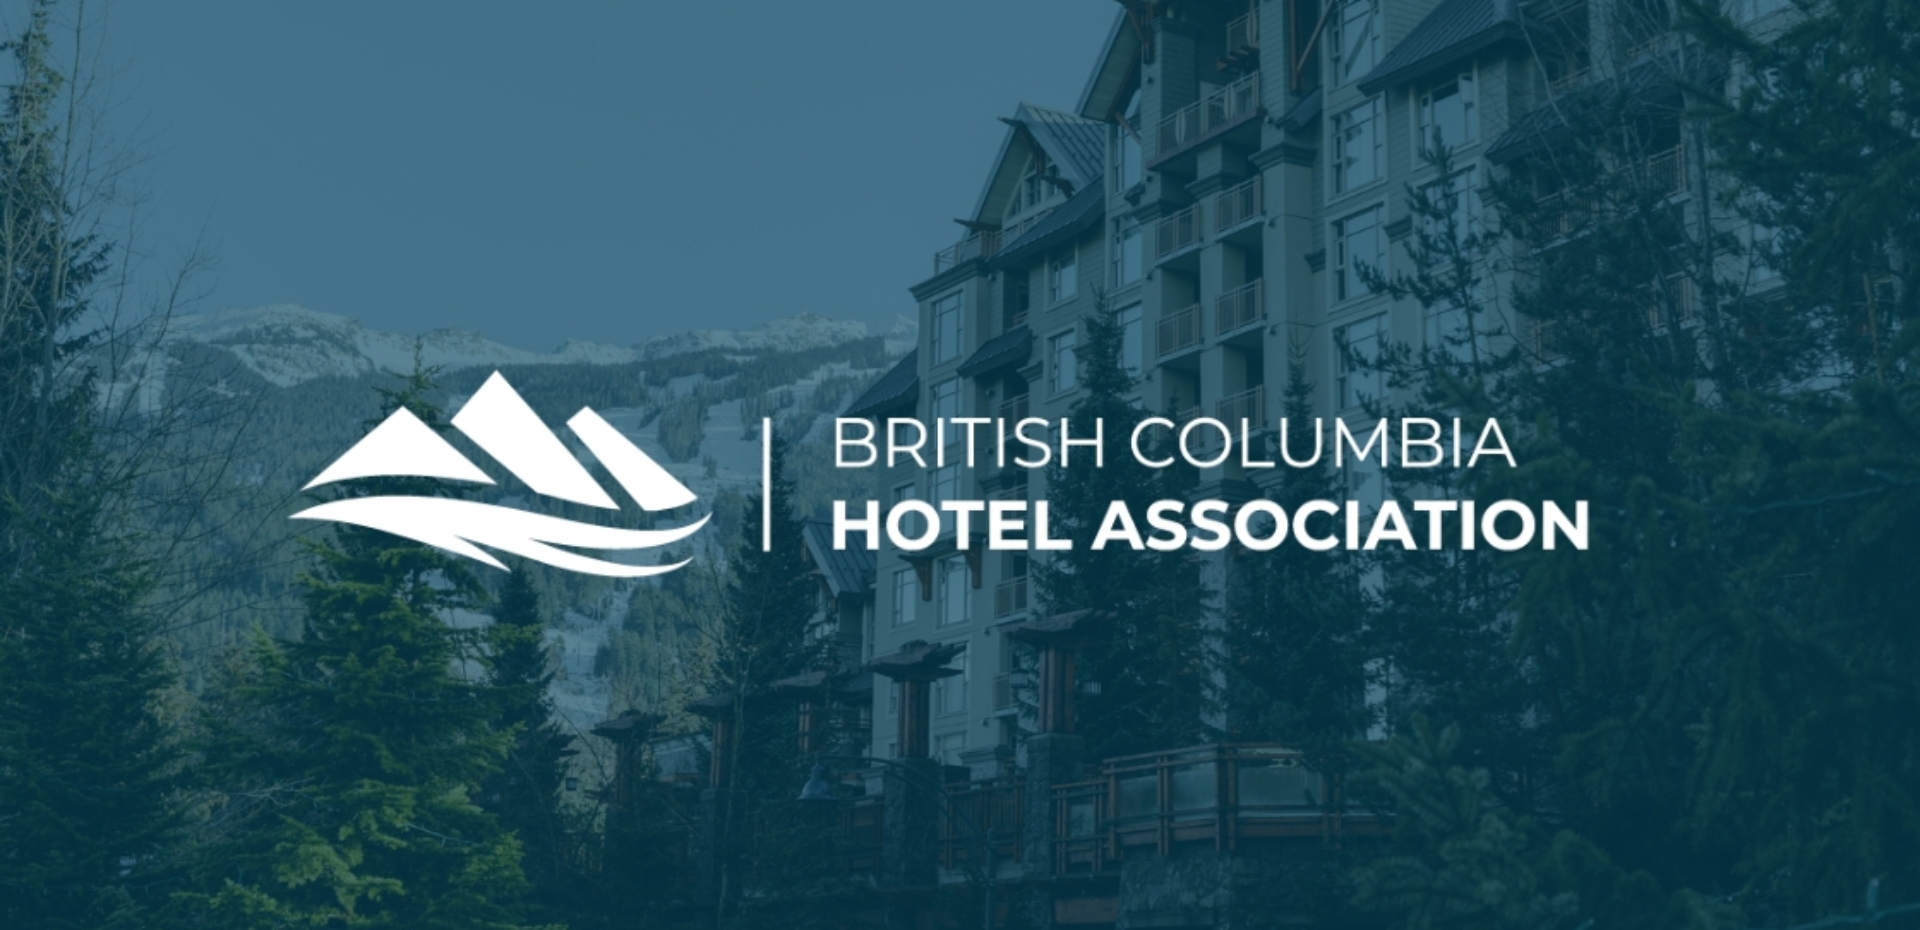 British Columbia Hotel Association logo